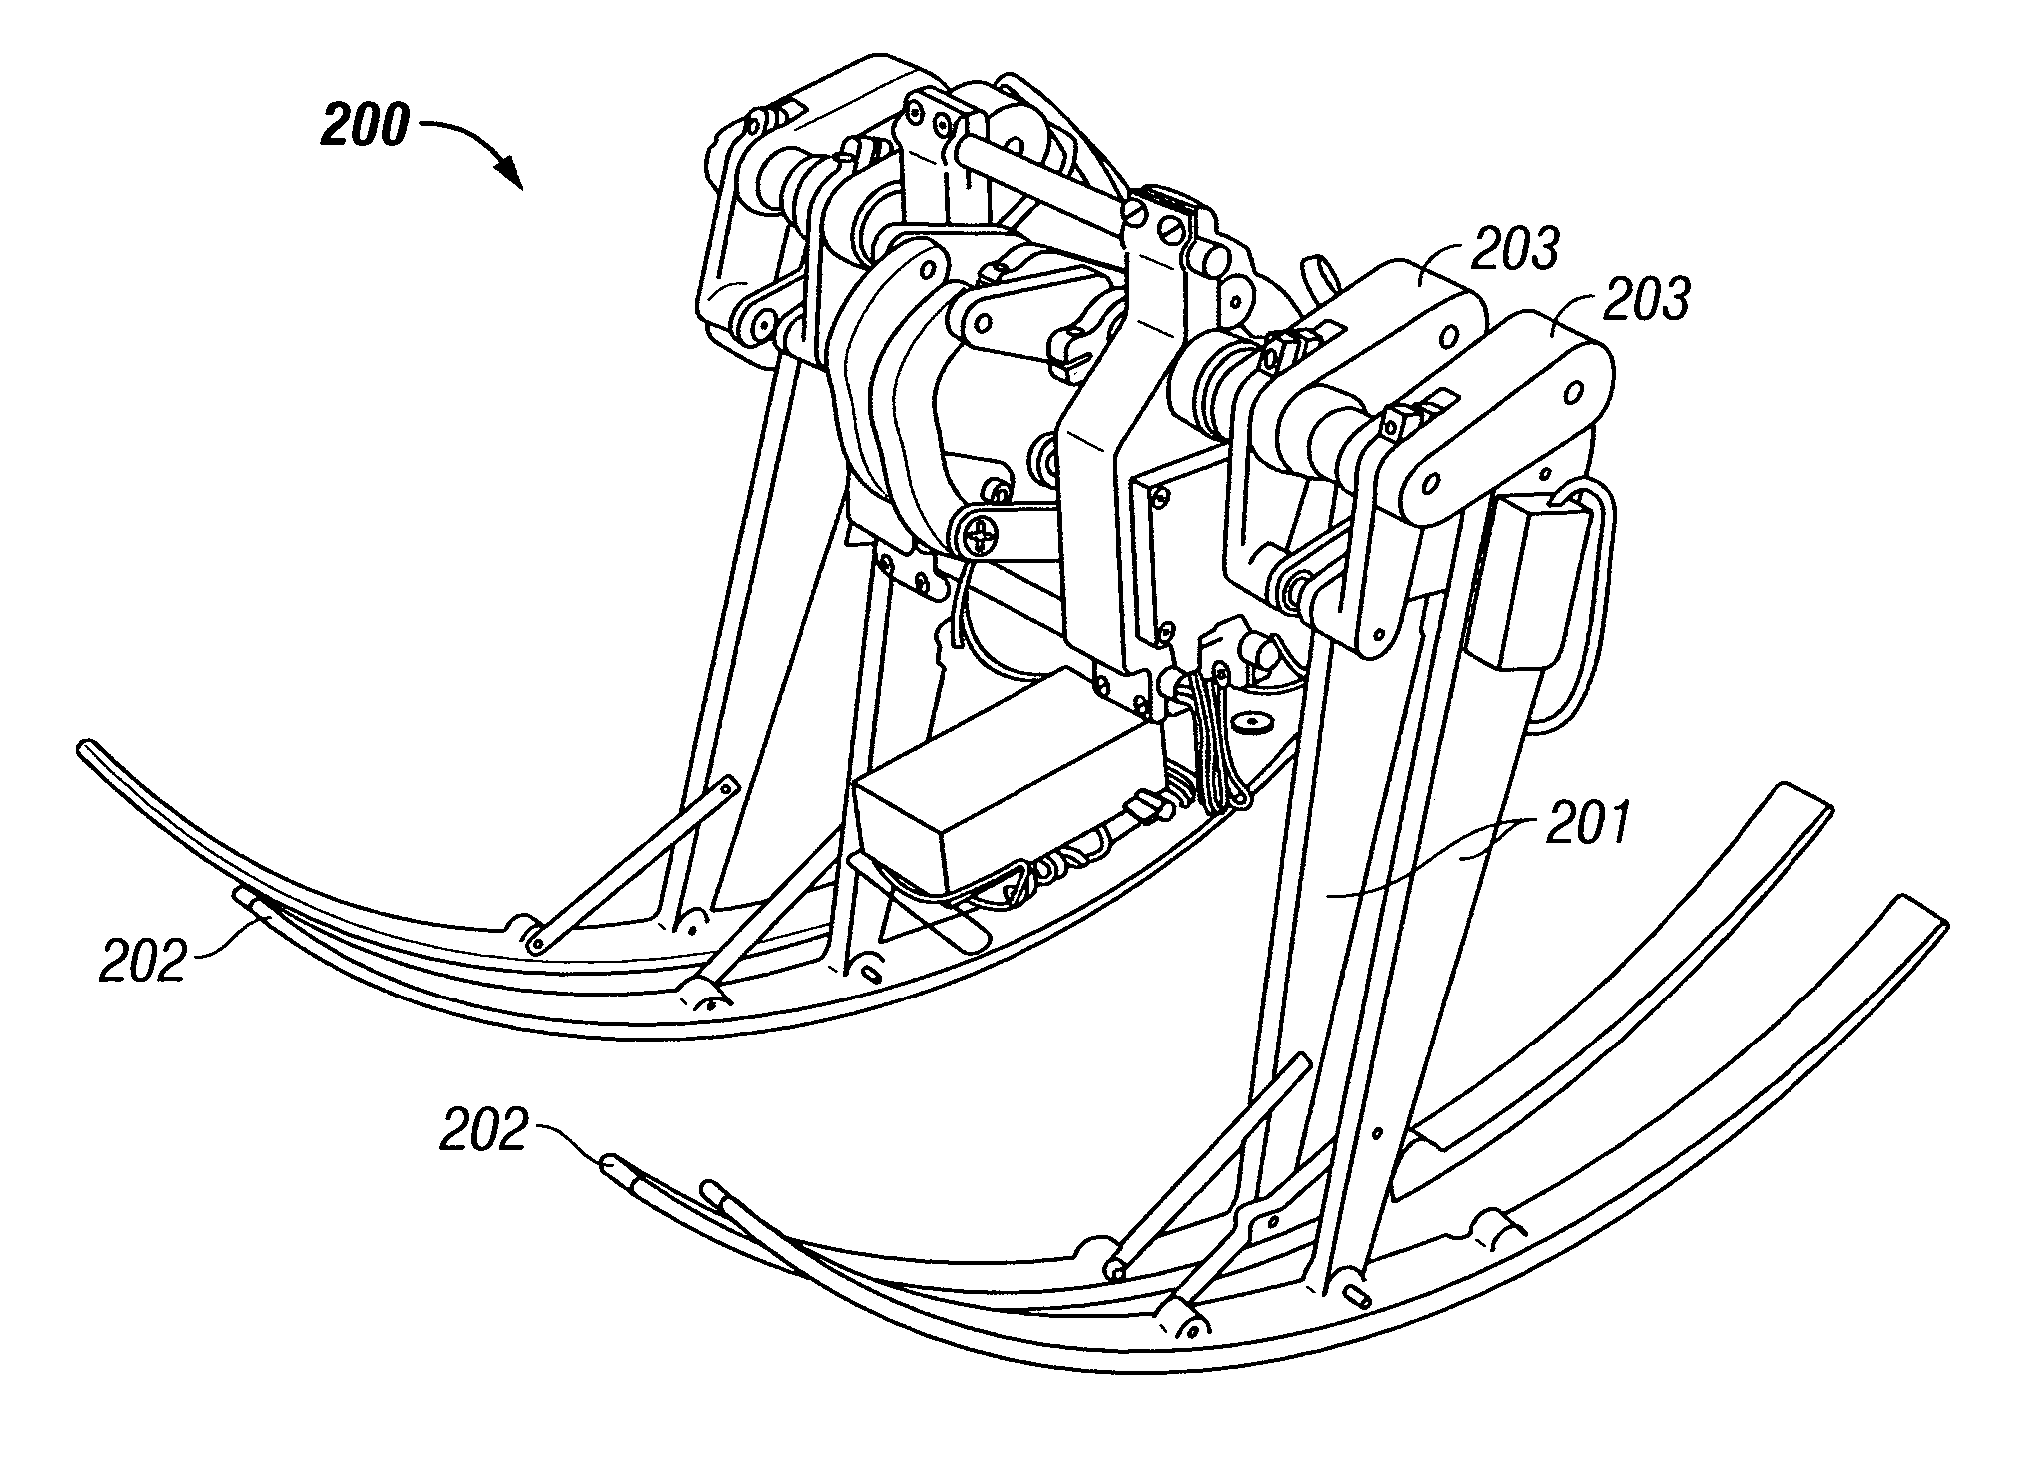 Bimodal conveyance mechanism